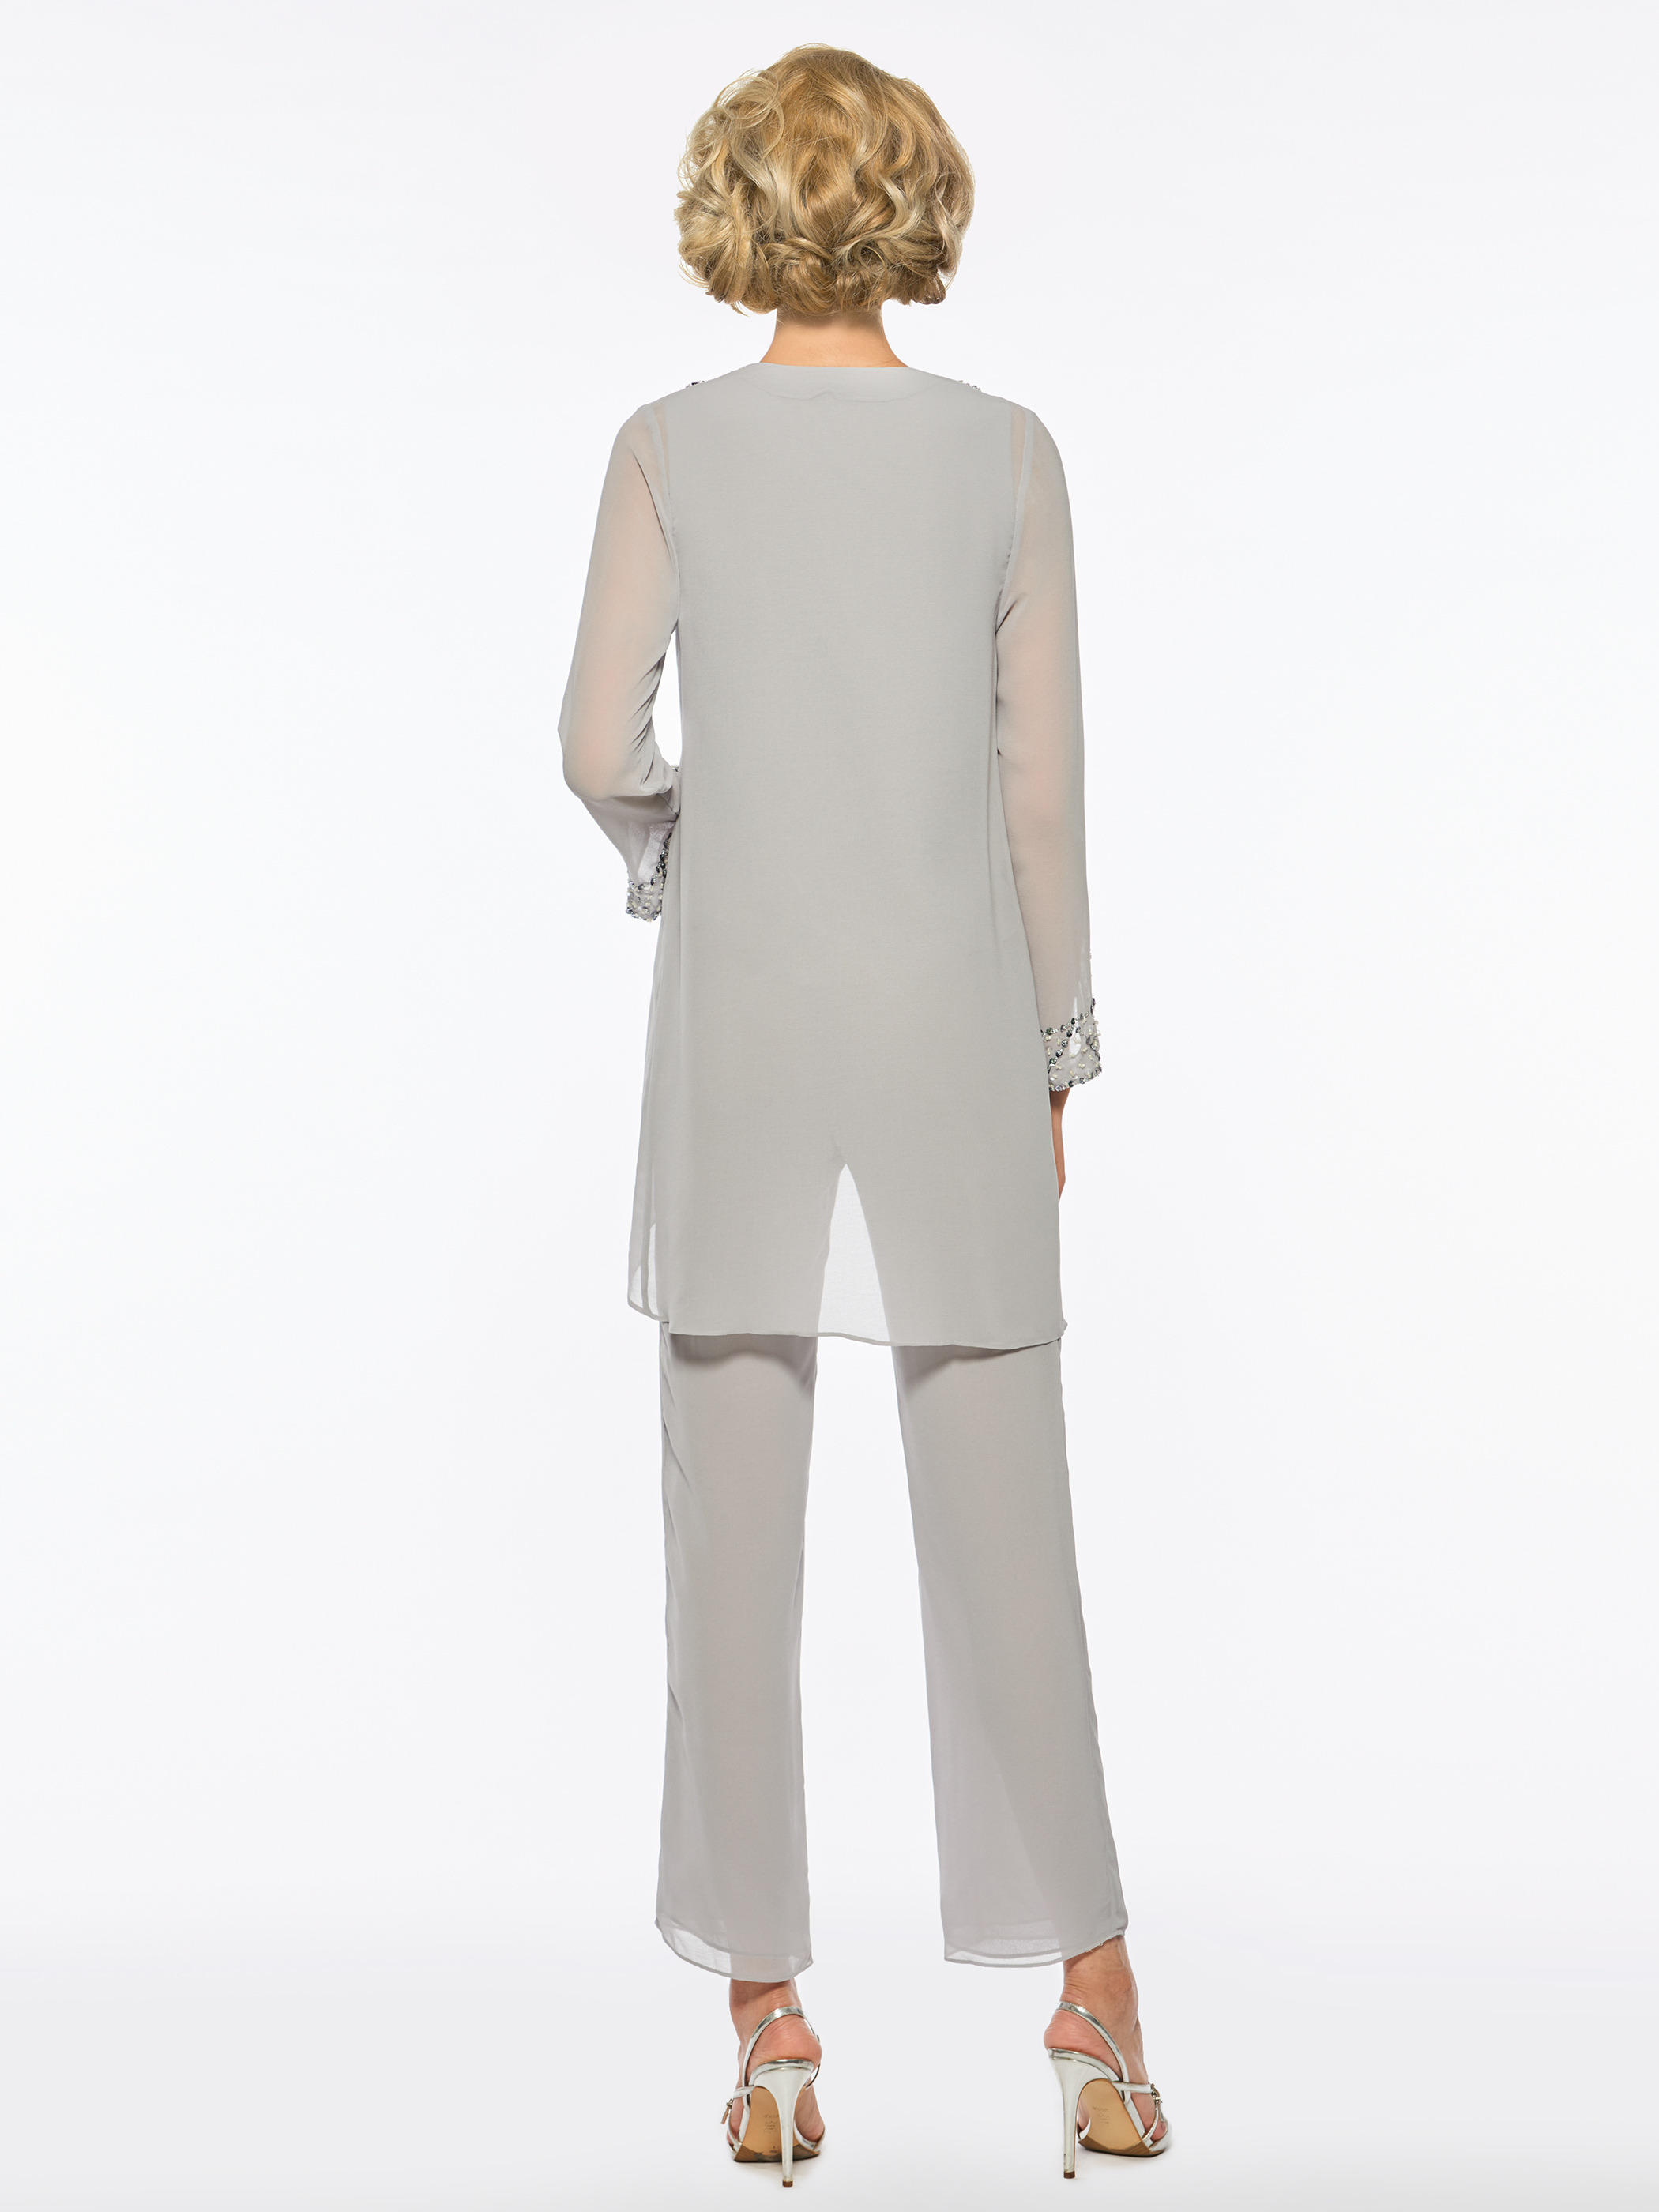 Floor-Length Sheath/Column Evening Dress Mother of the Bride Pant Suits & Sets